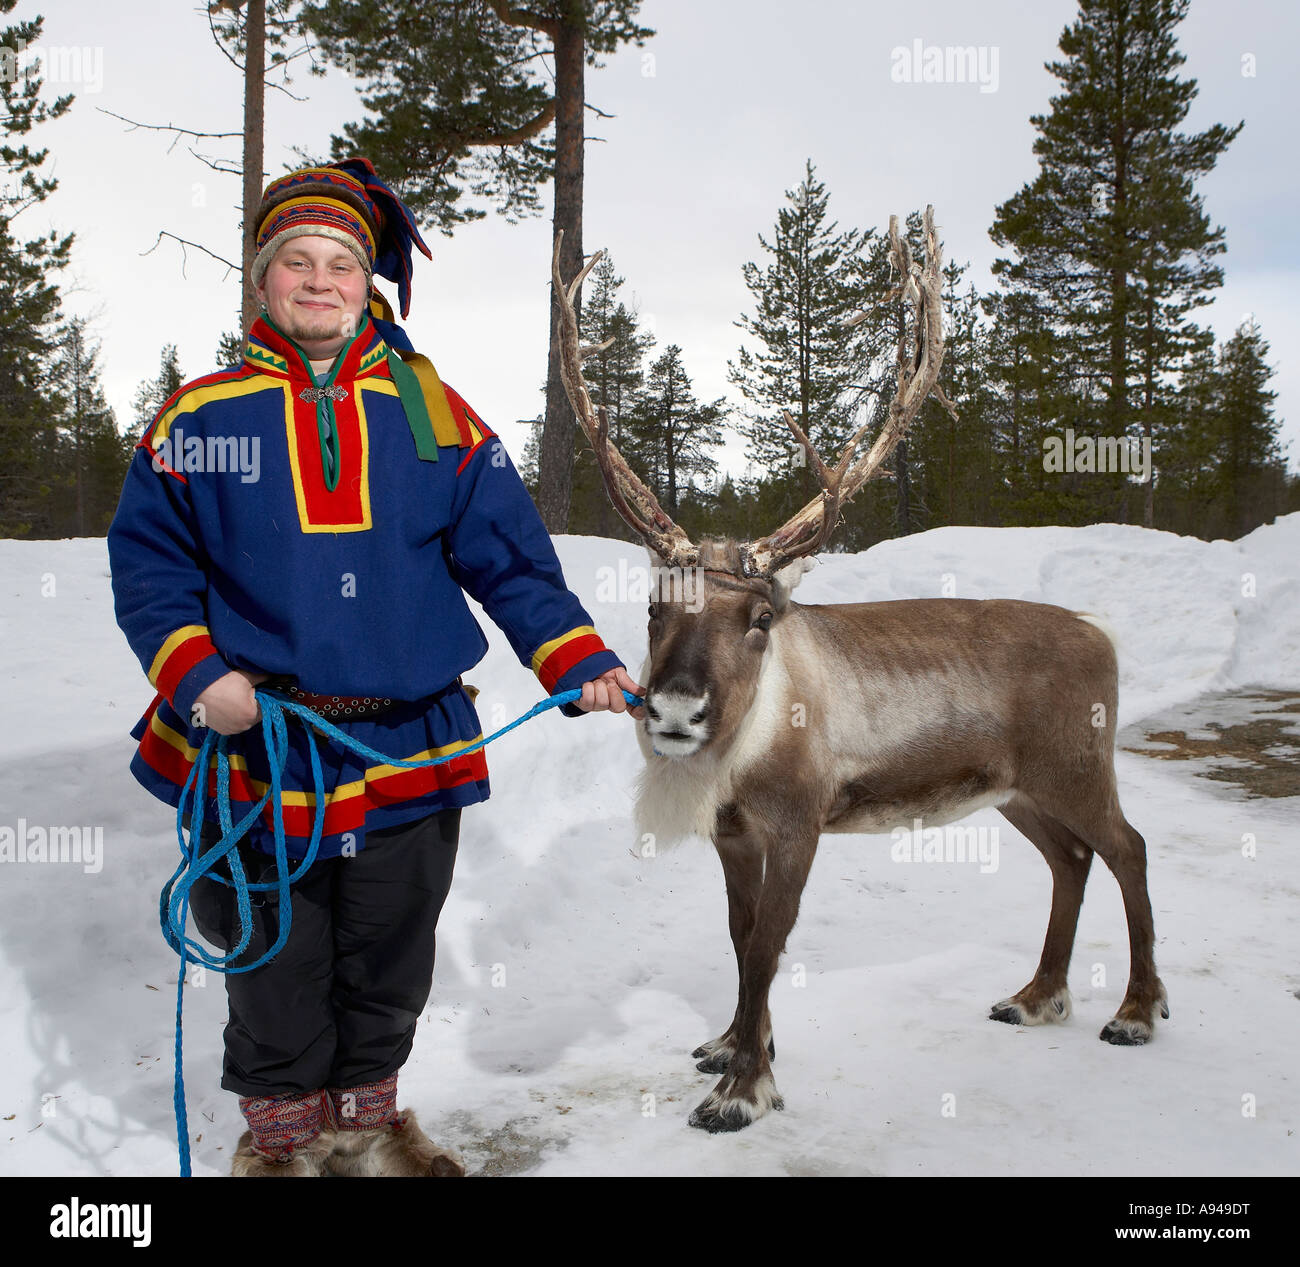 Sami with Reindeer, Lapland Finland Stock Photo